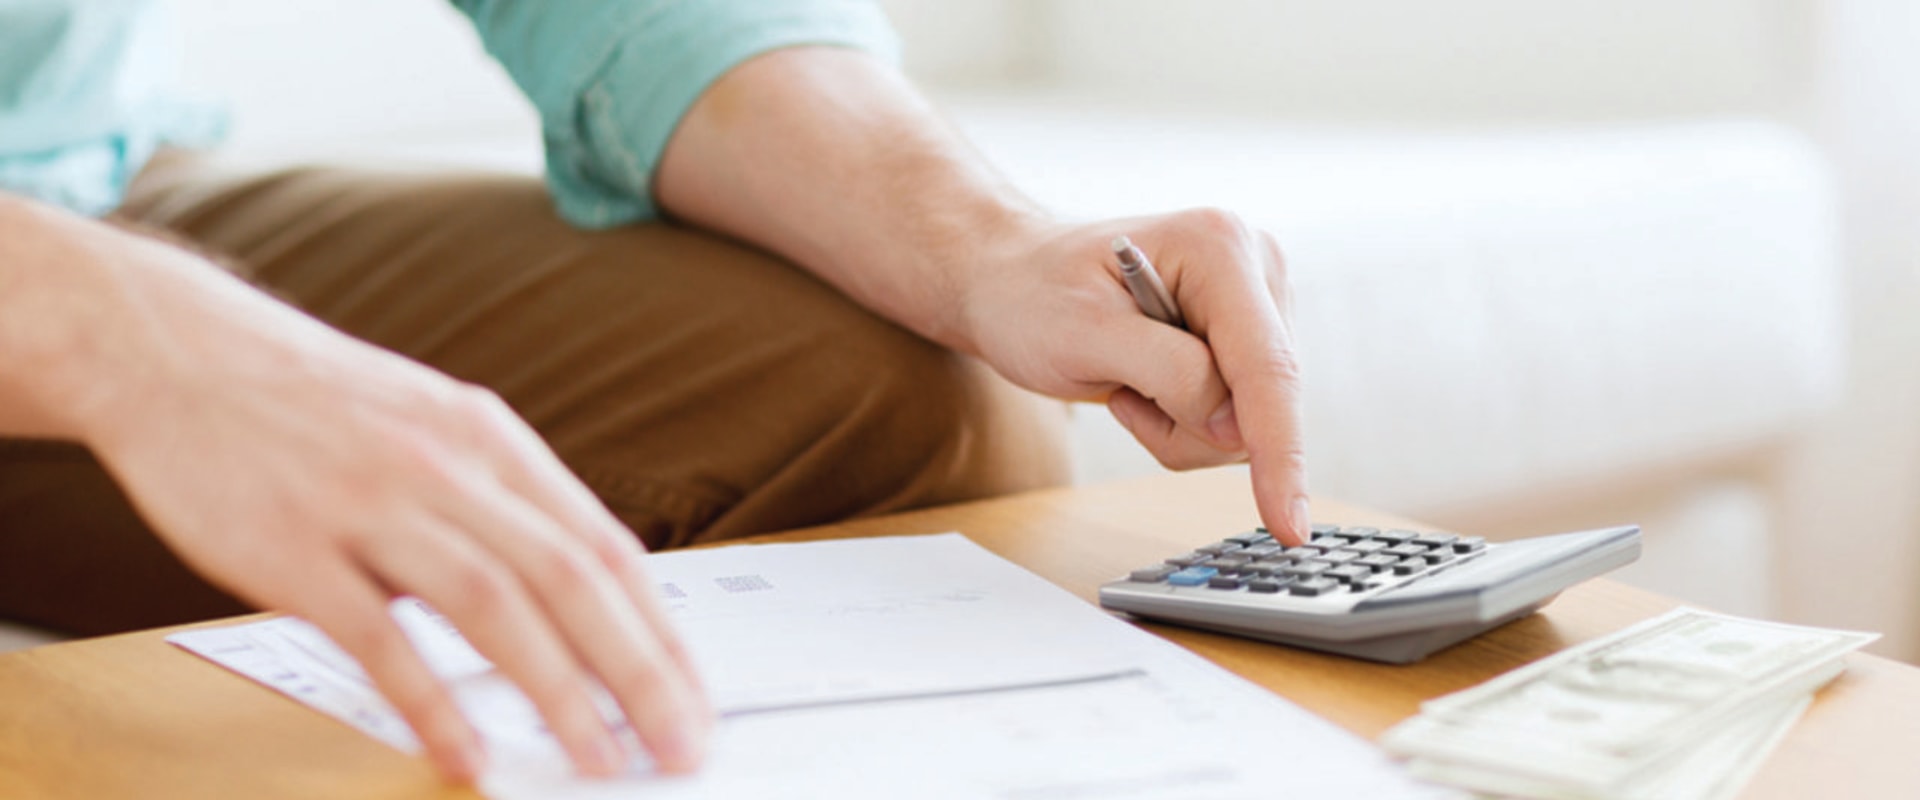 How do i calculate irs interest on unpaid taxes?